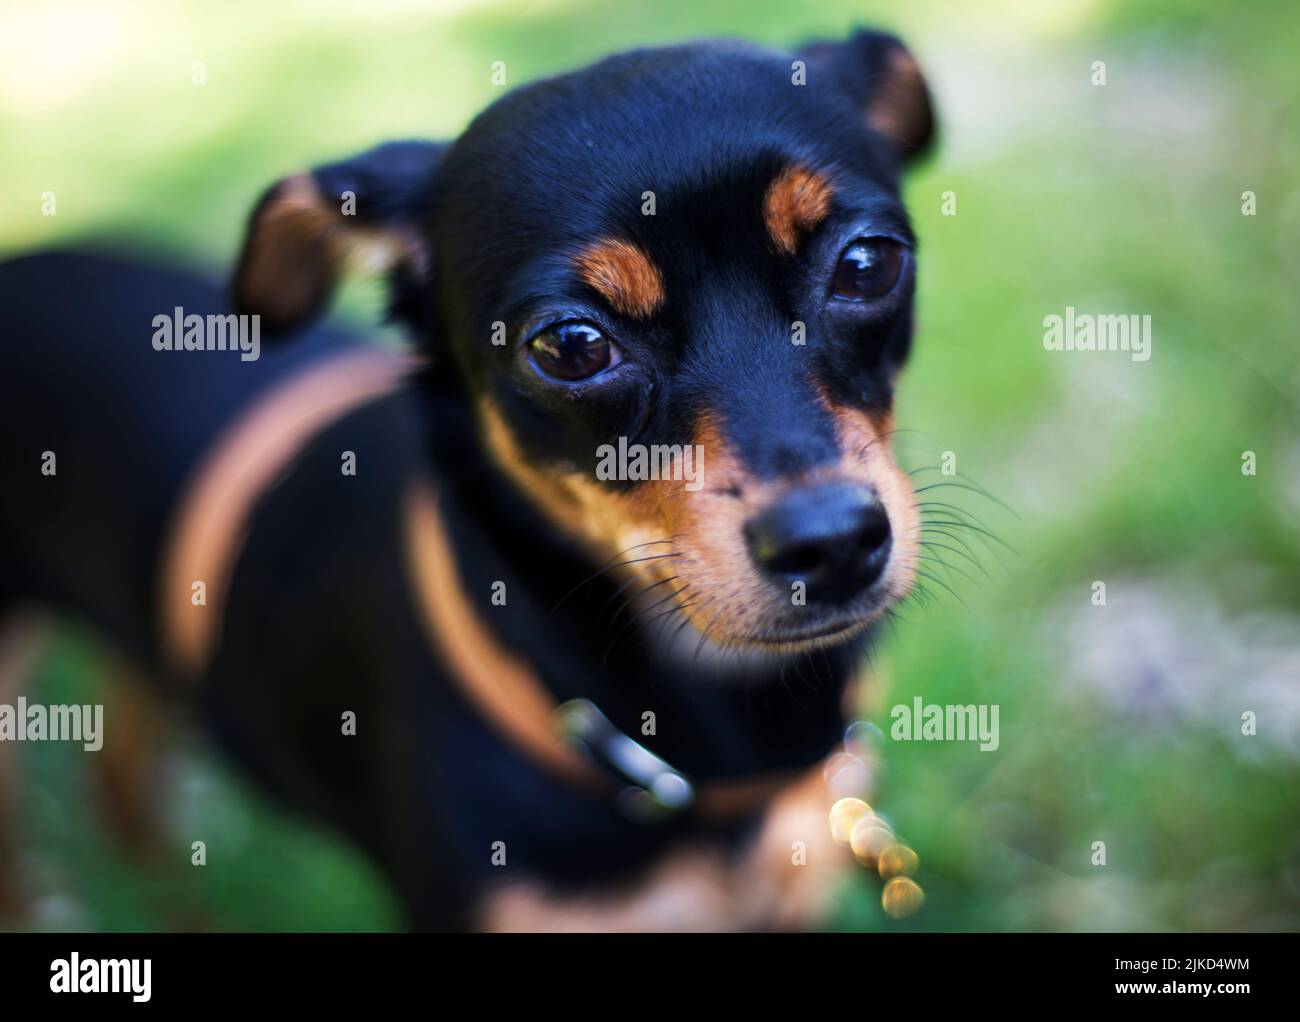 focused portrait of pincher dog Stock Photo